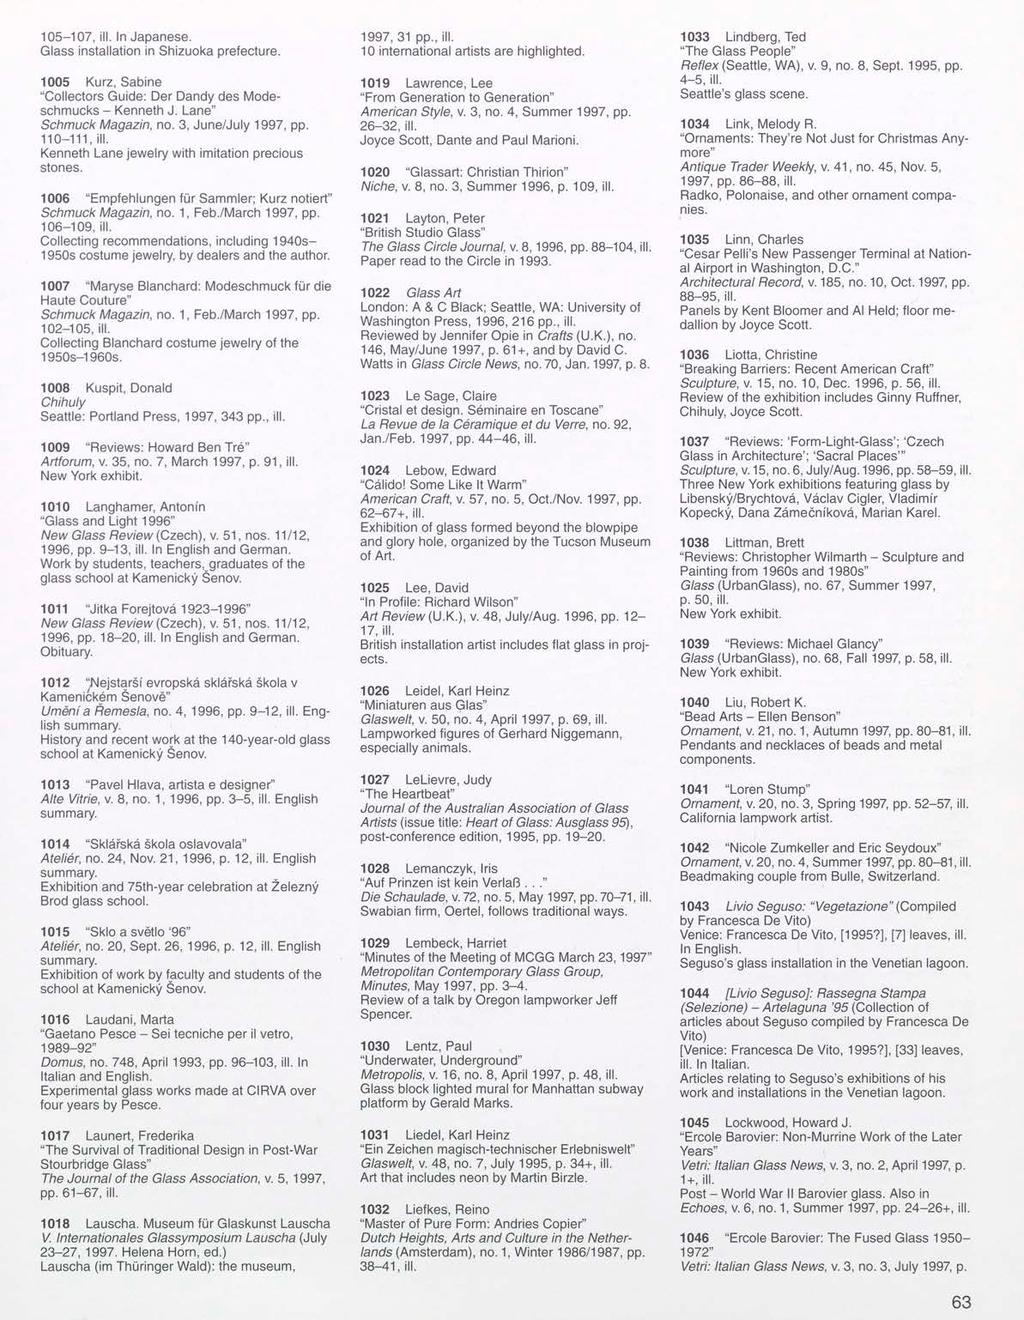 105-107, ill. In Japanese. Glass installation in Shizuoka prefecture. 1005 Kurz, Sabine "Collectors Guide: Der Dandy des Modeschmucks - Kenneth J. Lane" Schmuck Magazin, no. 3, June/July 1997, pp.